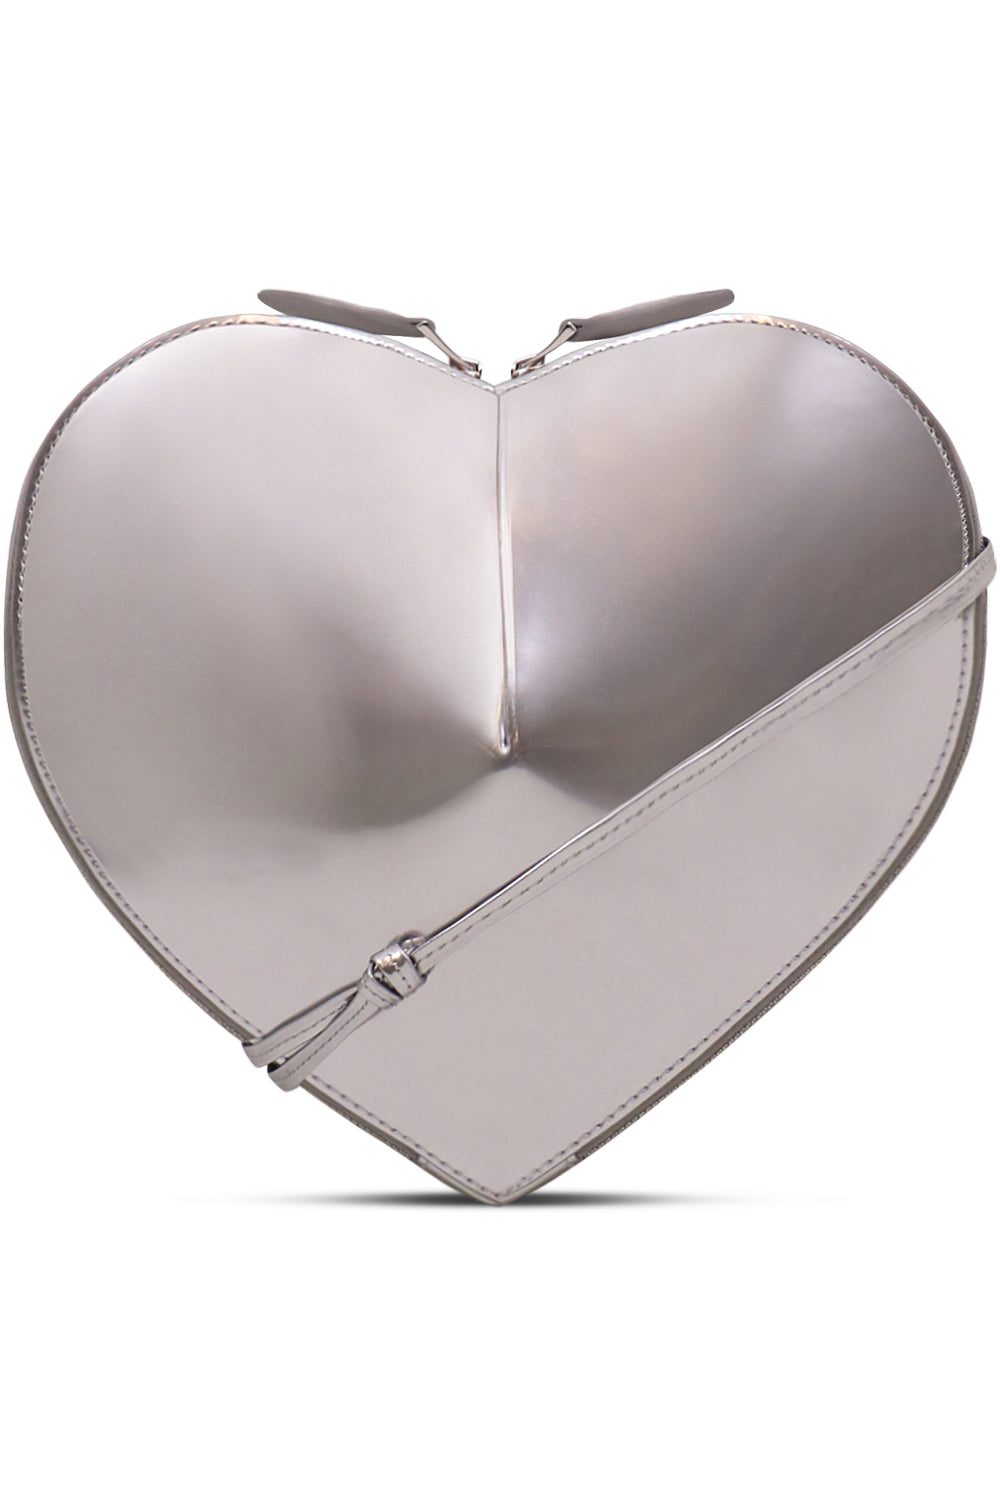 ALAÏA Le Coeur Heart Chain Bag in Blue Ardoise